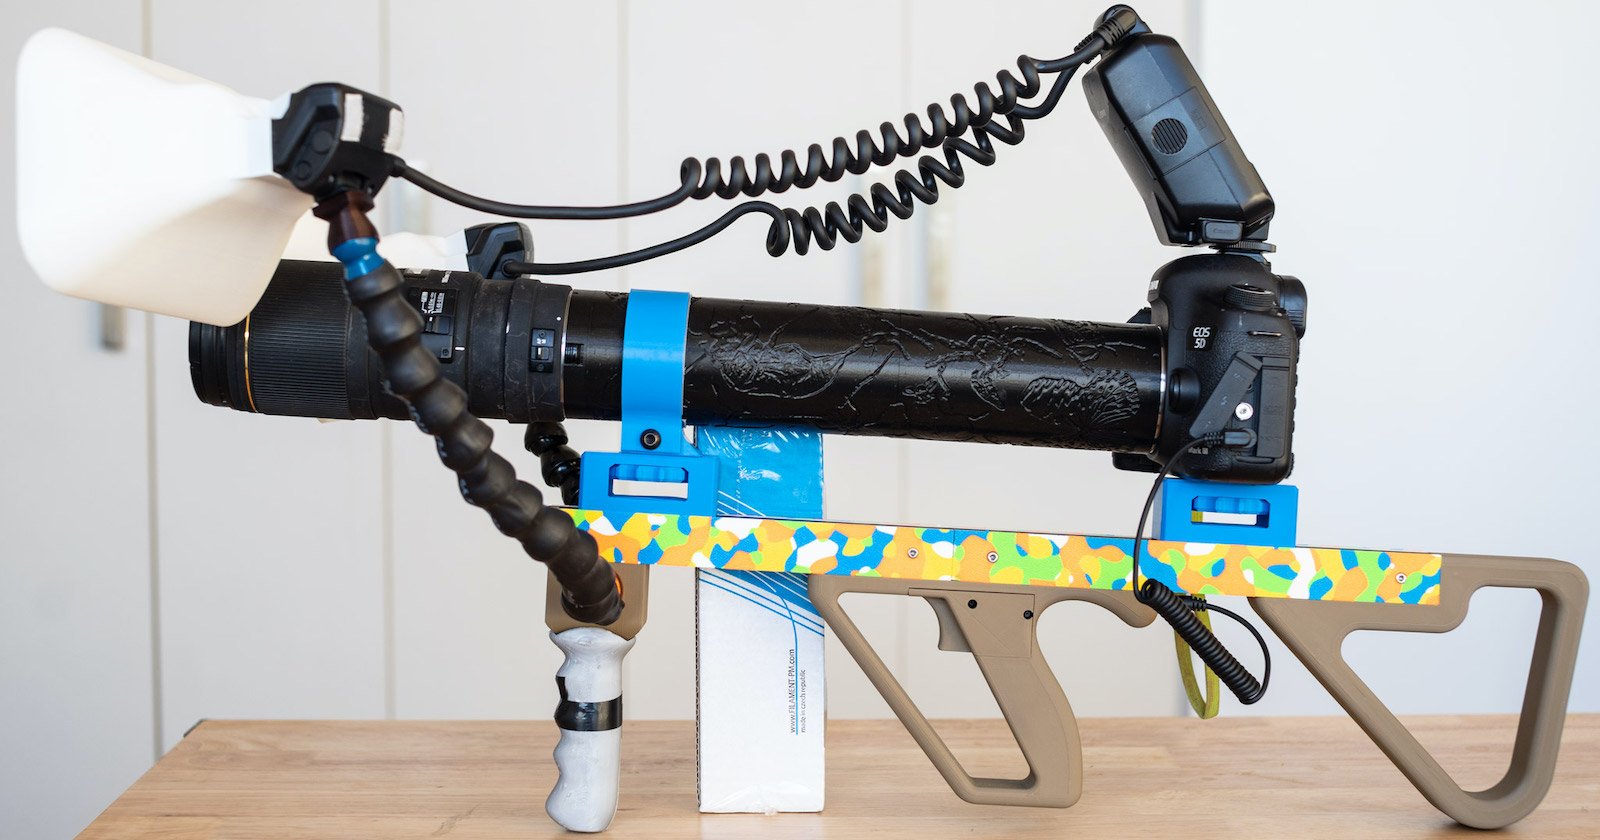  guy created custom rifle-style grip his 